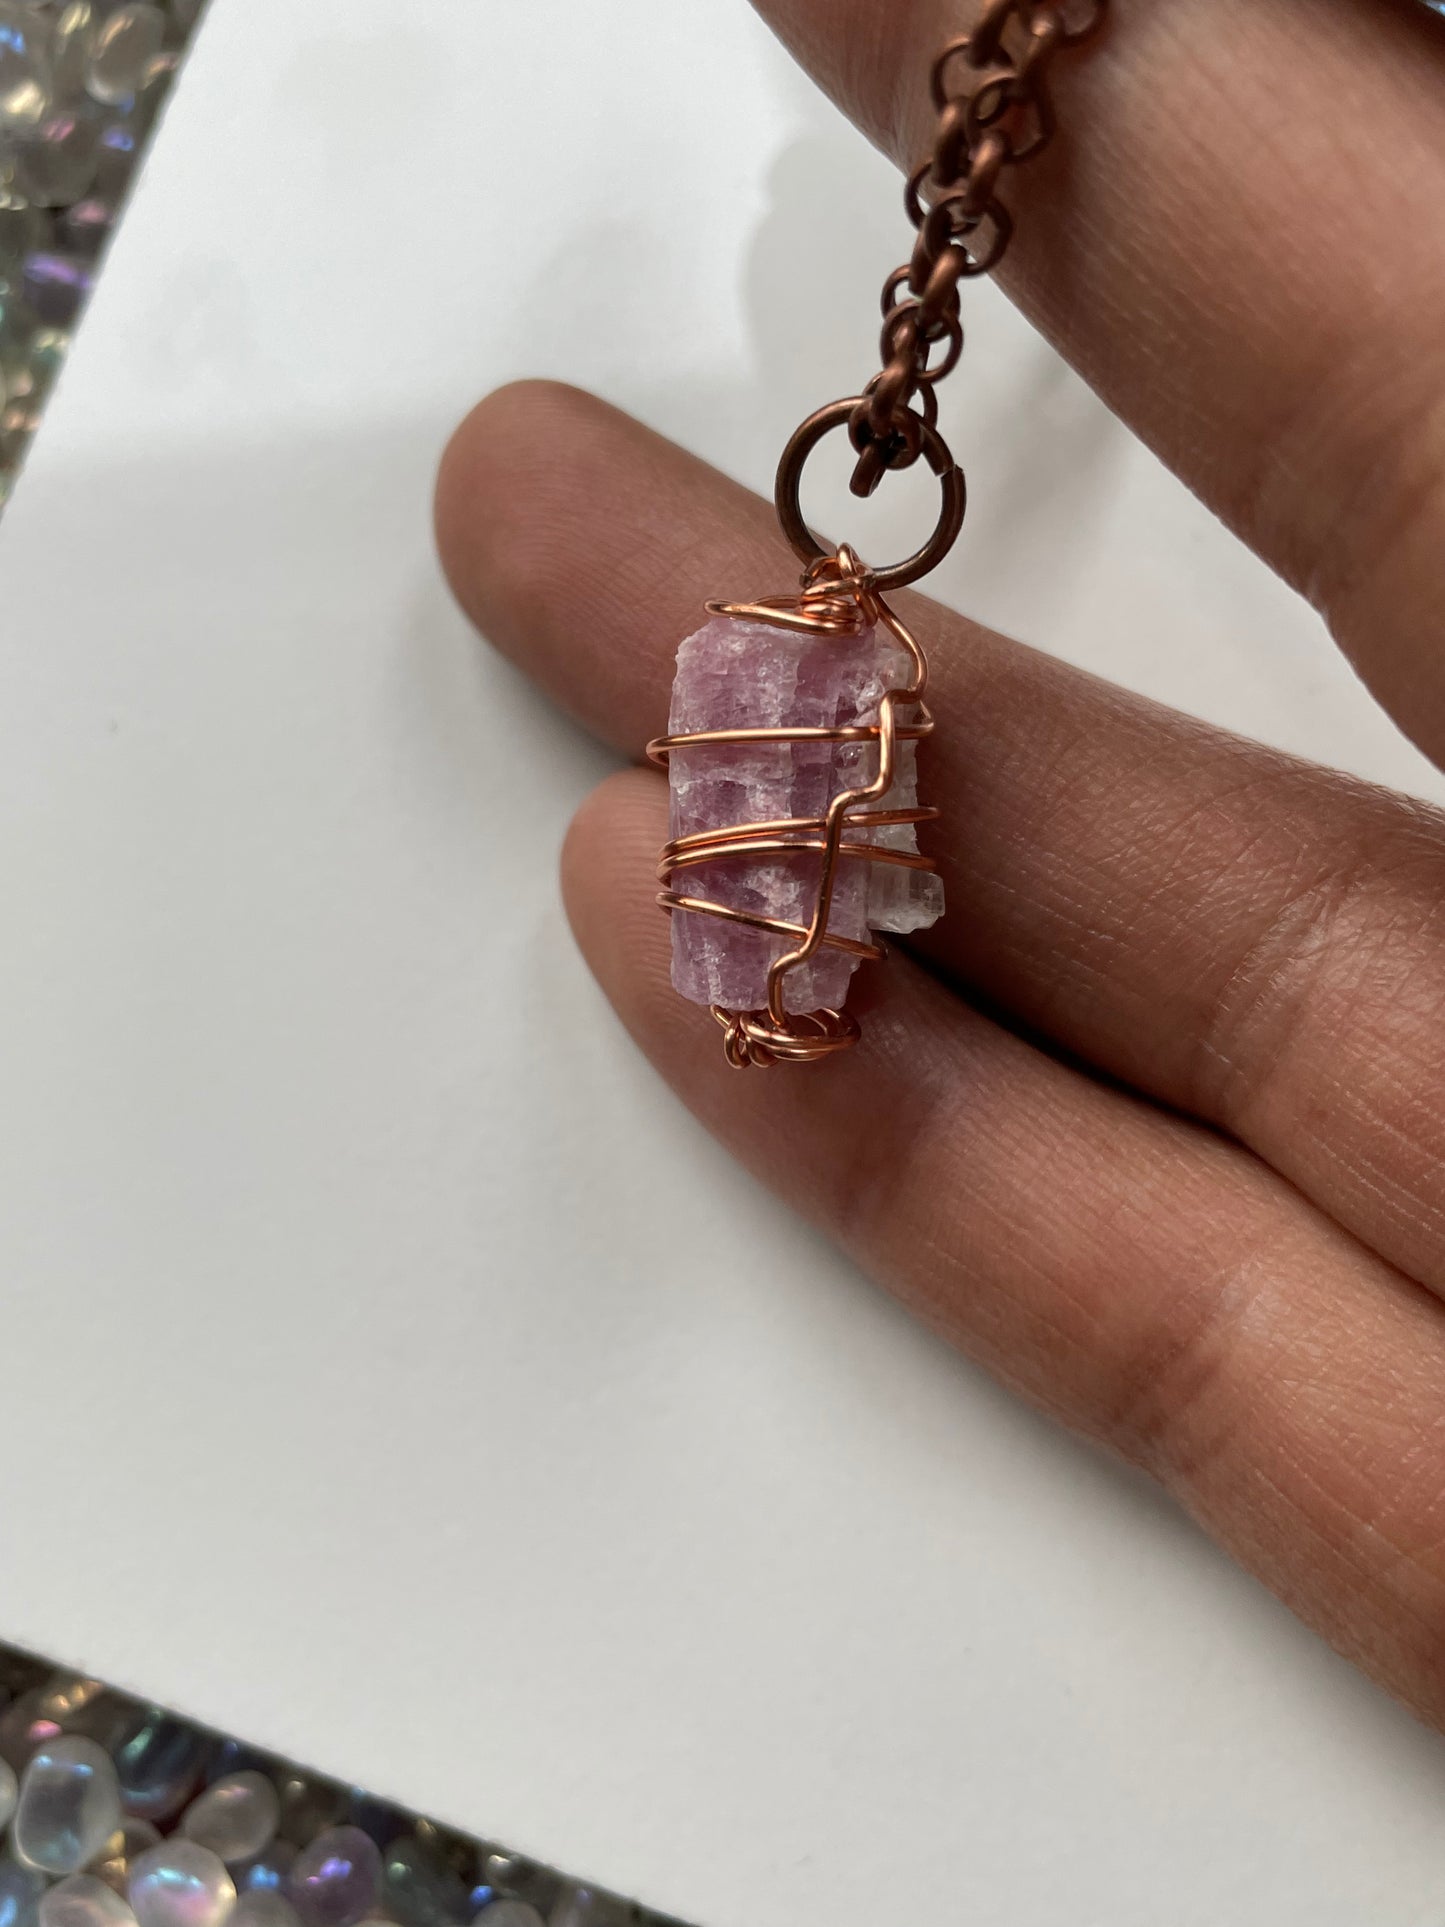 Pink Tourmaline Crystal Gemstone Rough Copper Wire Necklace